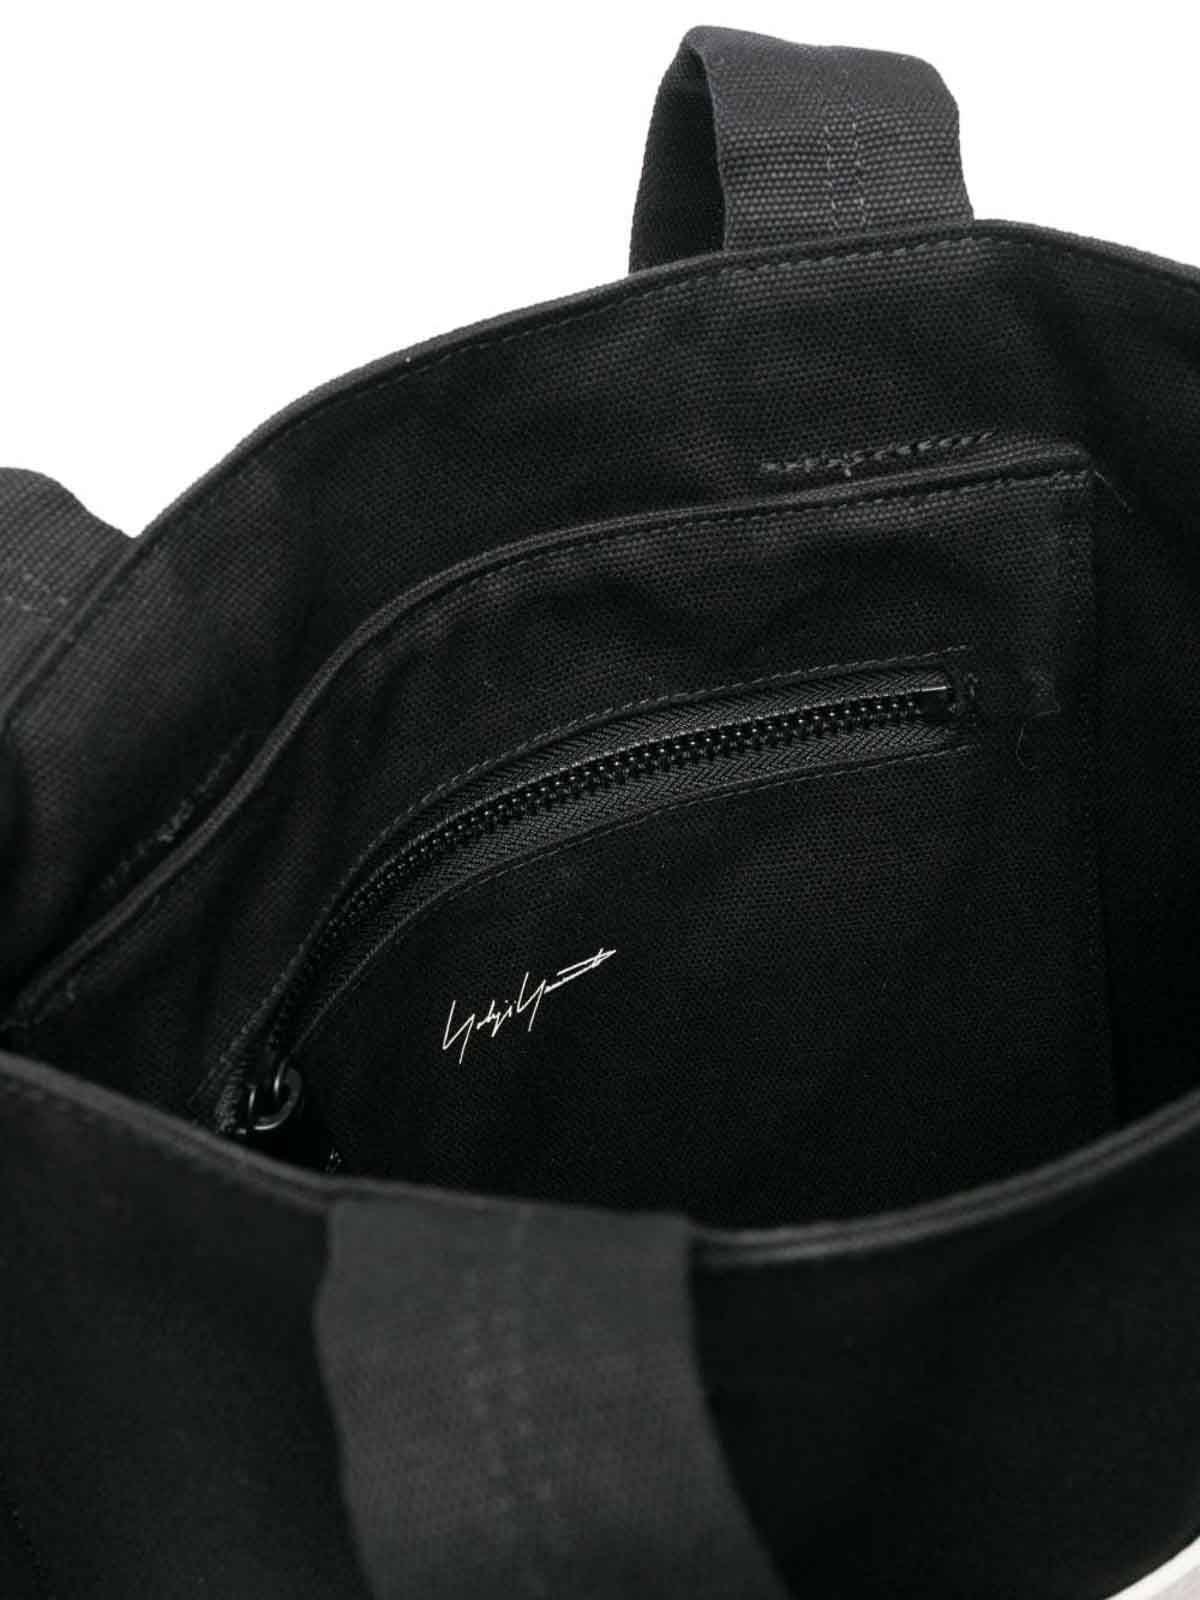 Cross body bags Y-3 - Y-3 lux tote bag - IN5161 | thebs.com [ikrix